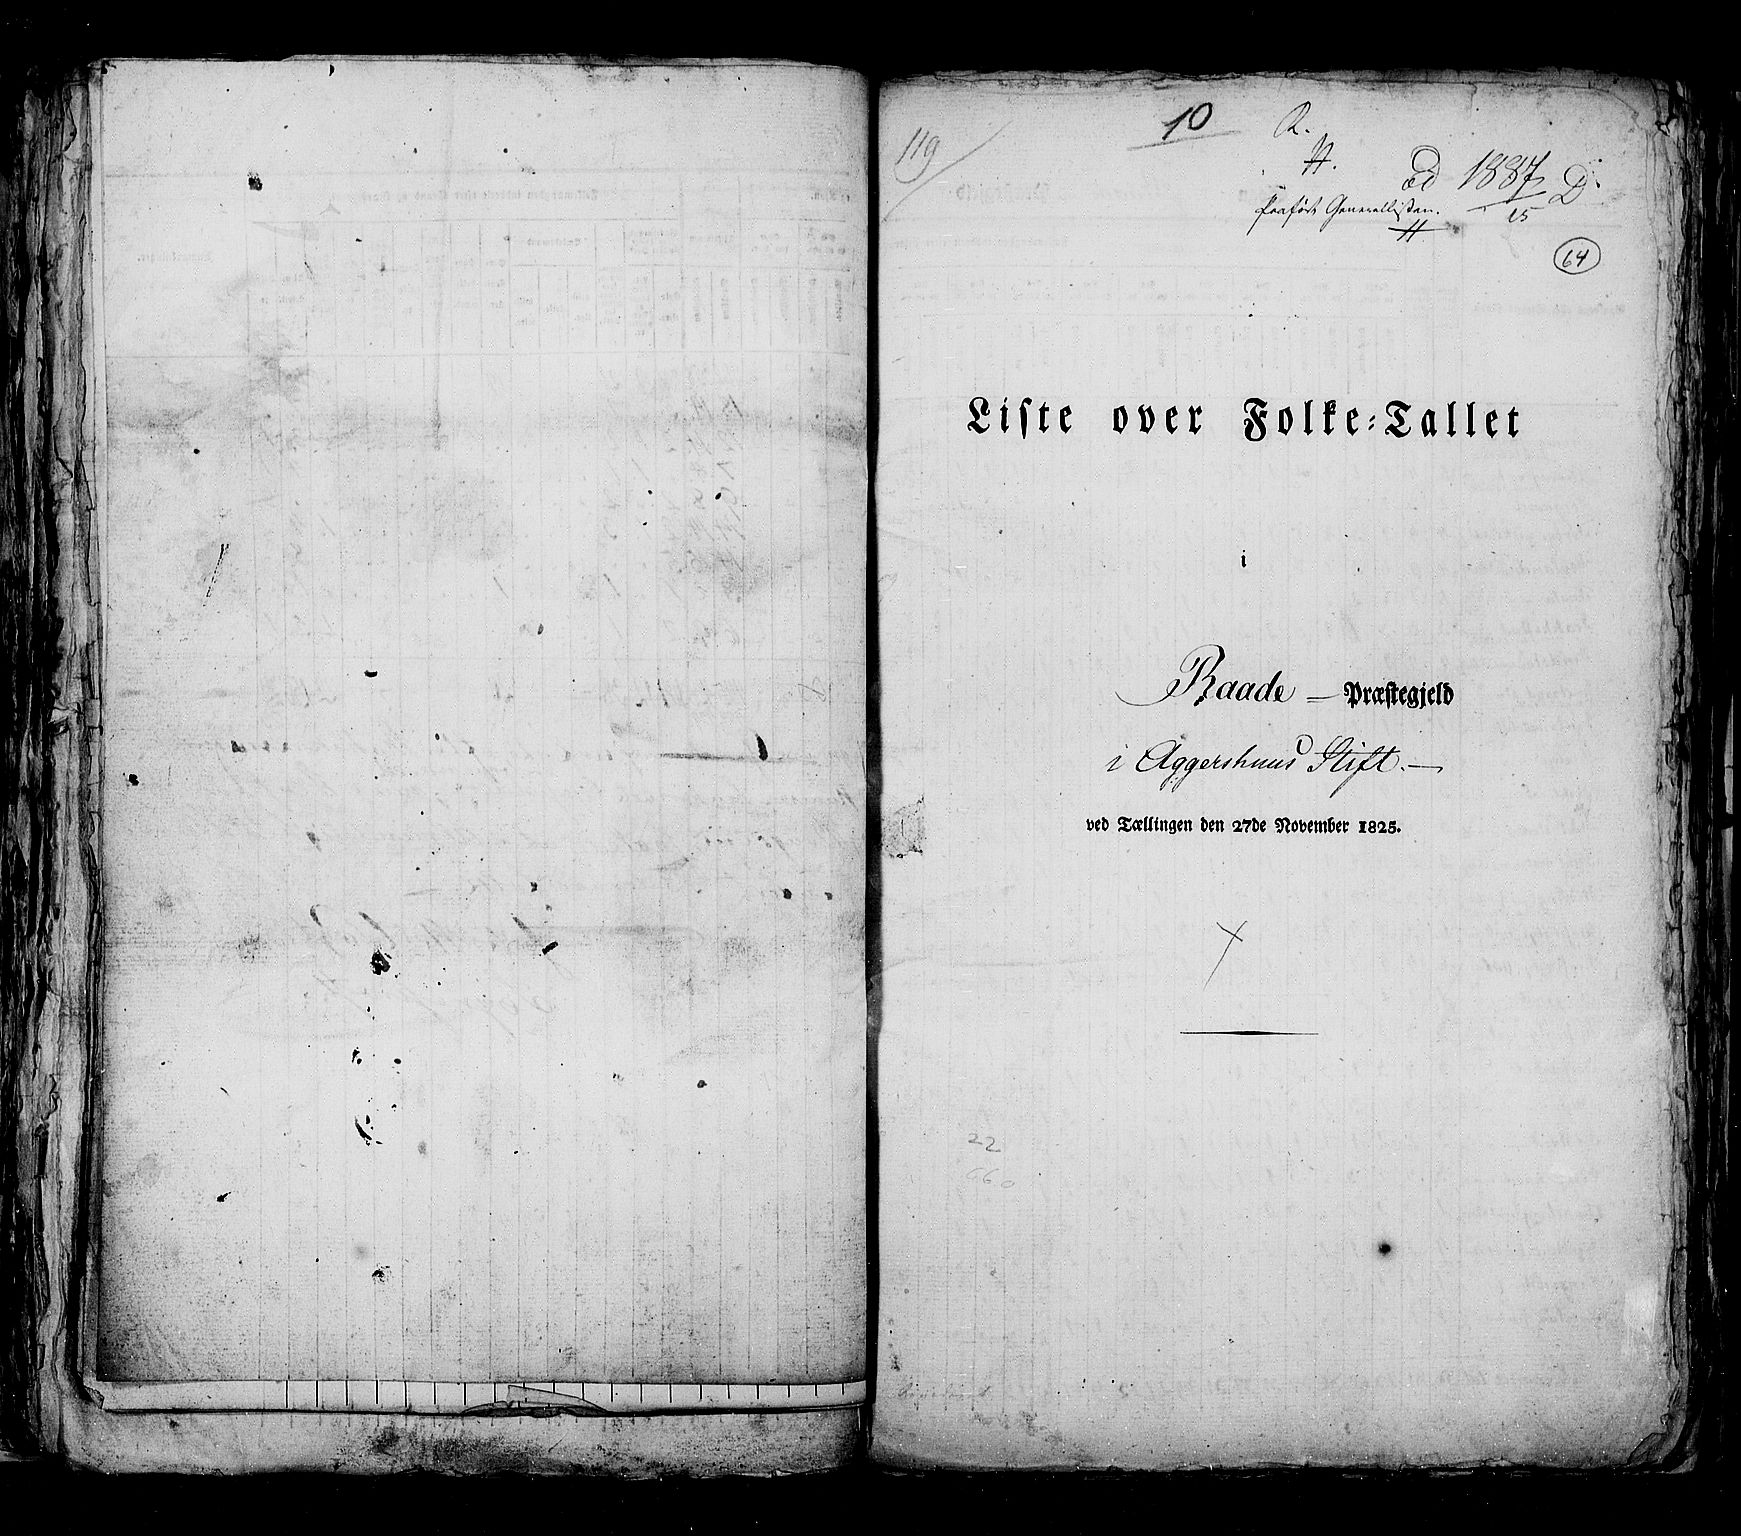 RA, Census 1825, vol. 3: Smålenenes amt, 1825, p. 64